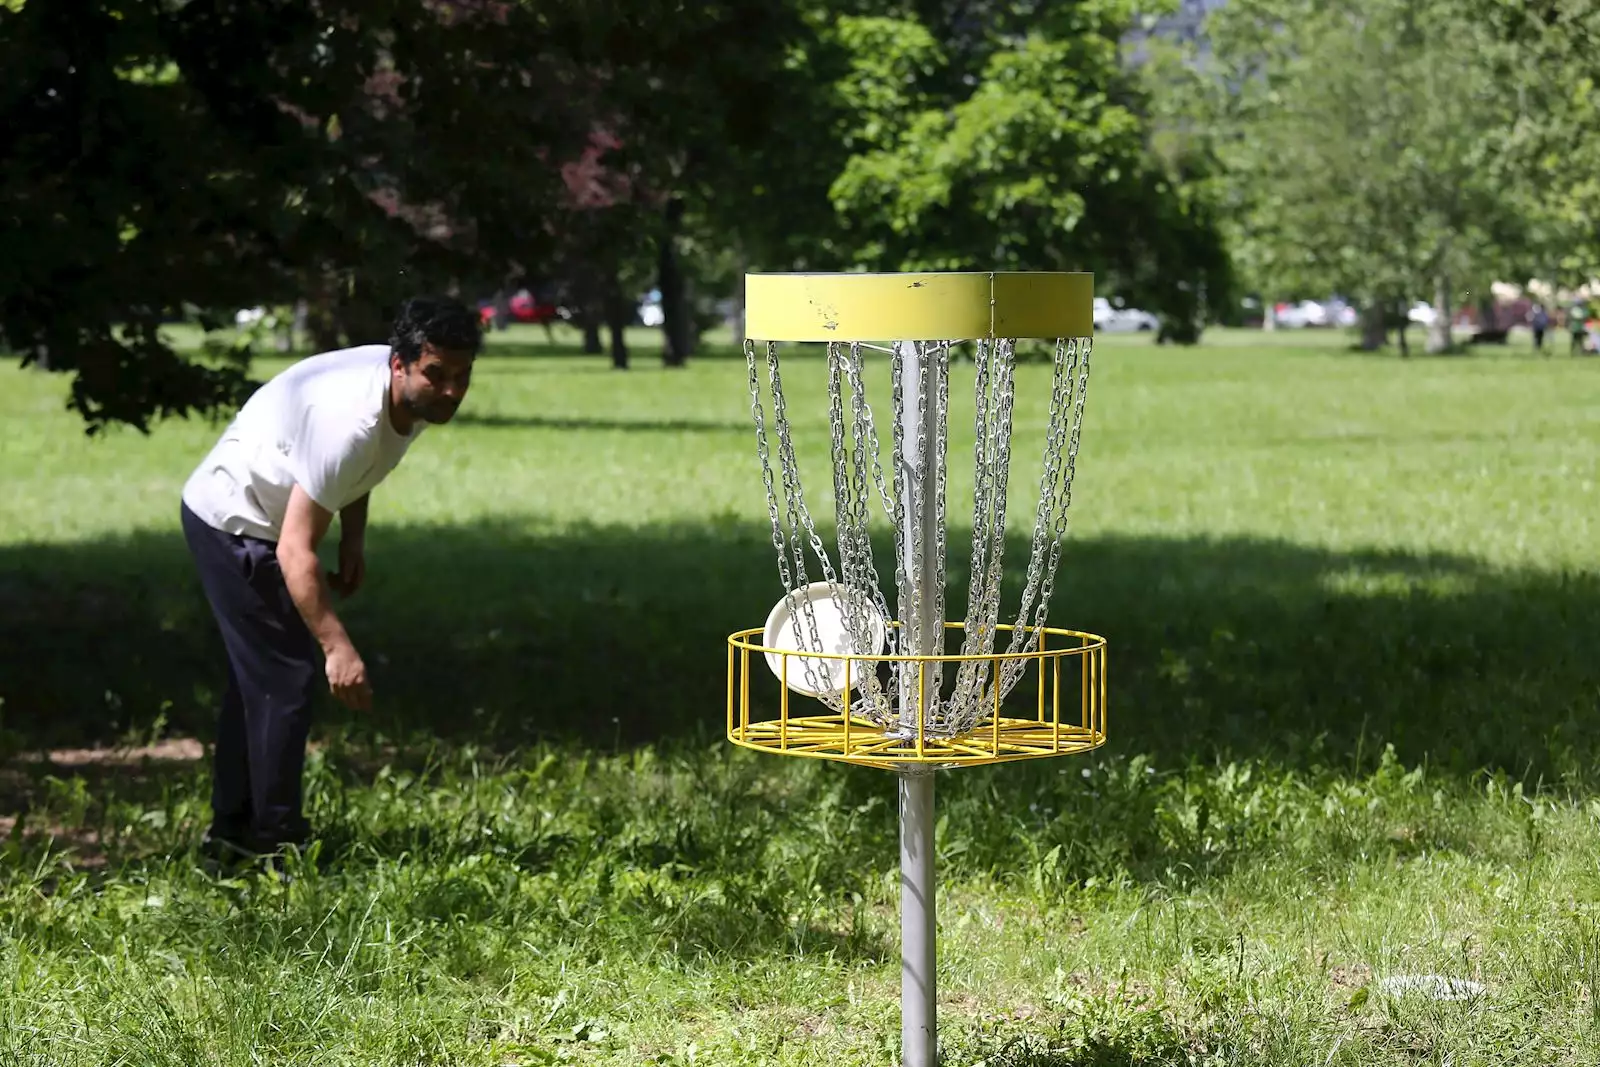 Frisbee Golf - a Lifelong Hobby